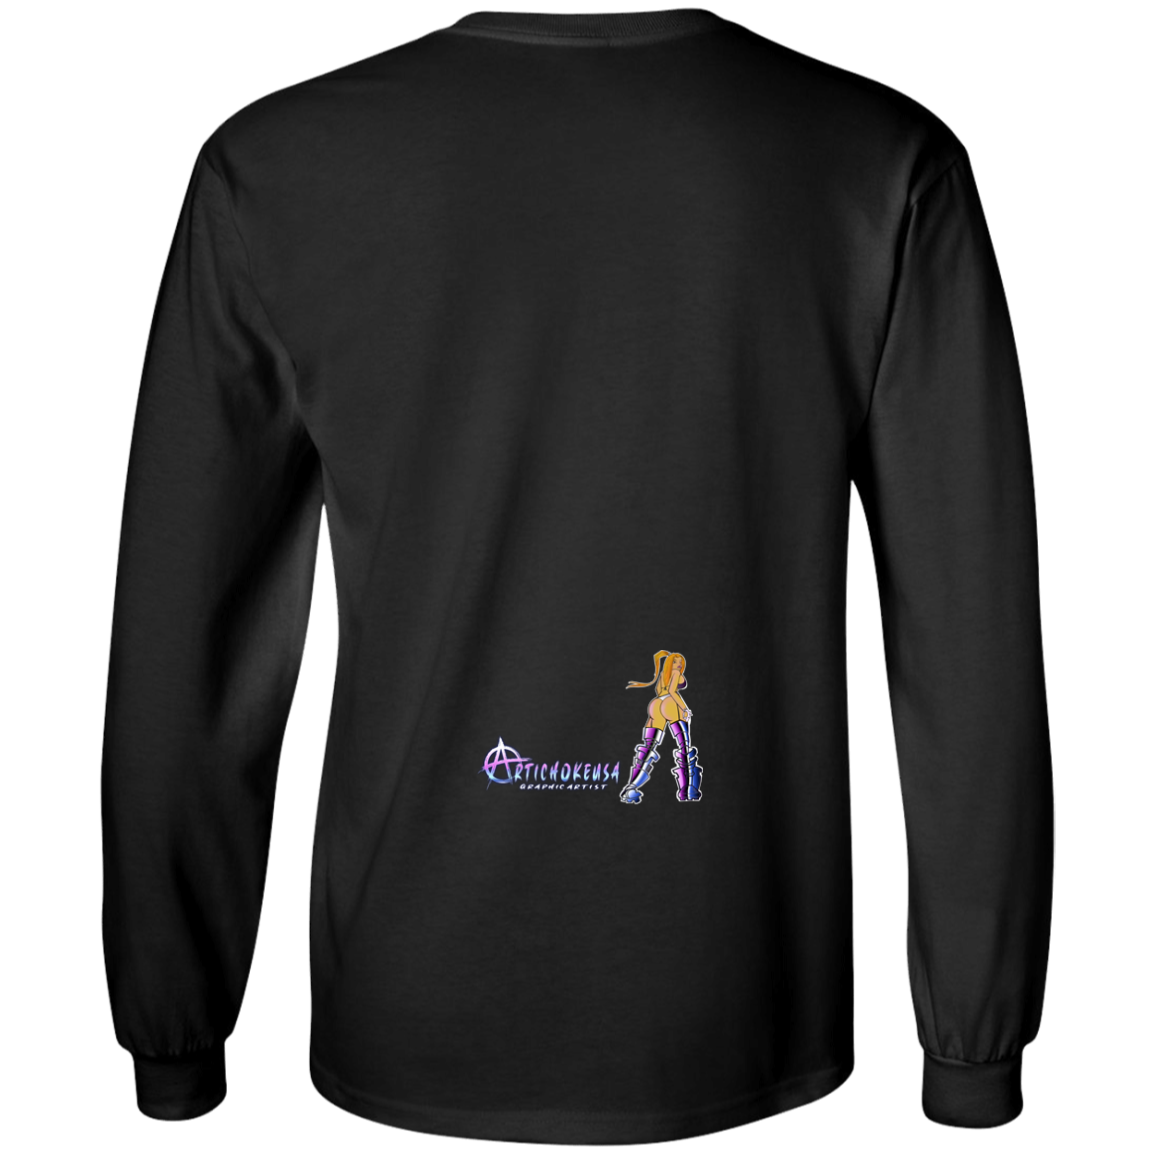 ArtichokeUSA Character and Font design. Let's Create Your Own Team Design Today. Dama de Croma. Long Sleeve 100% Cotton T-Shirt